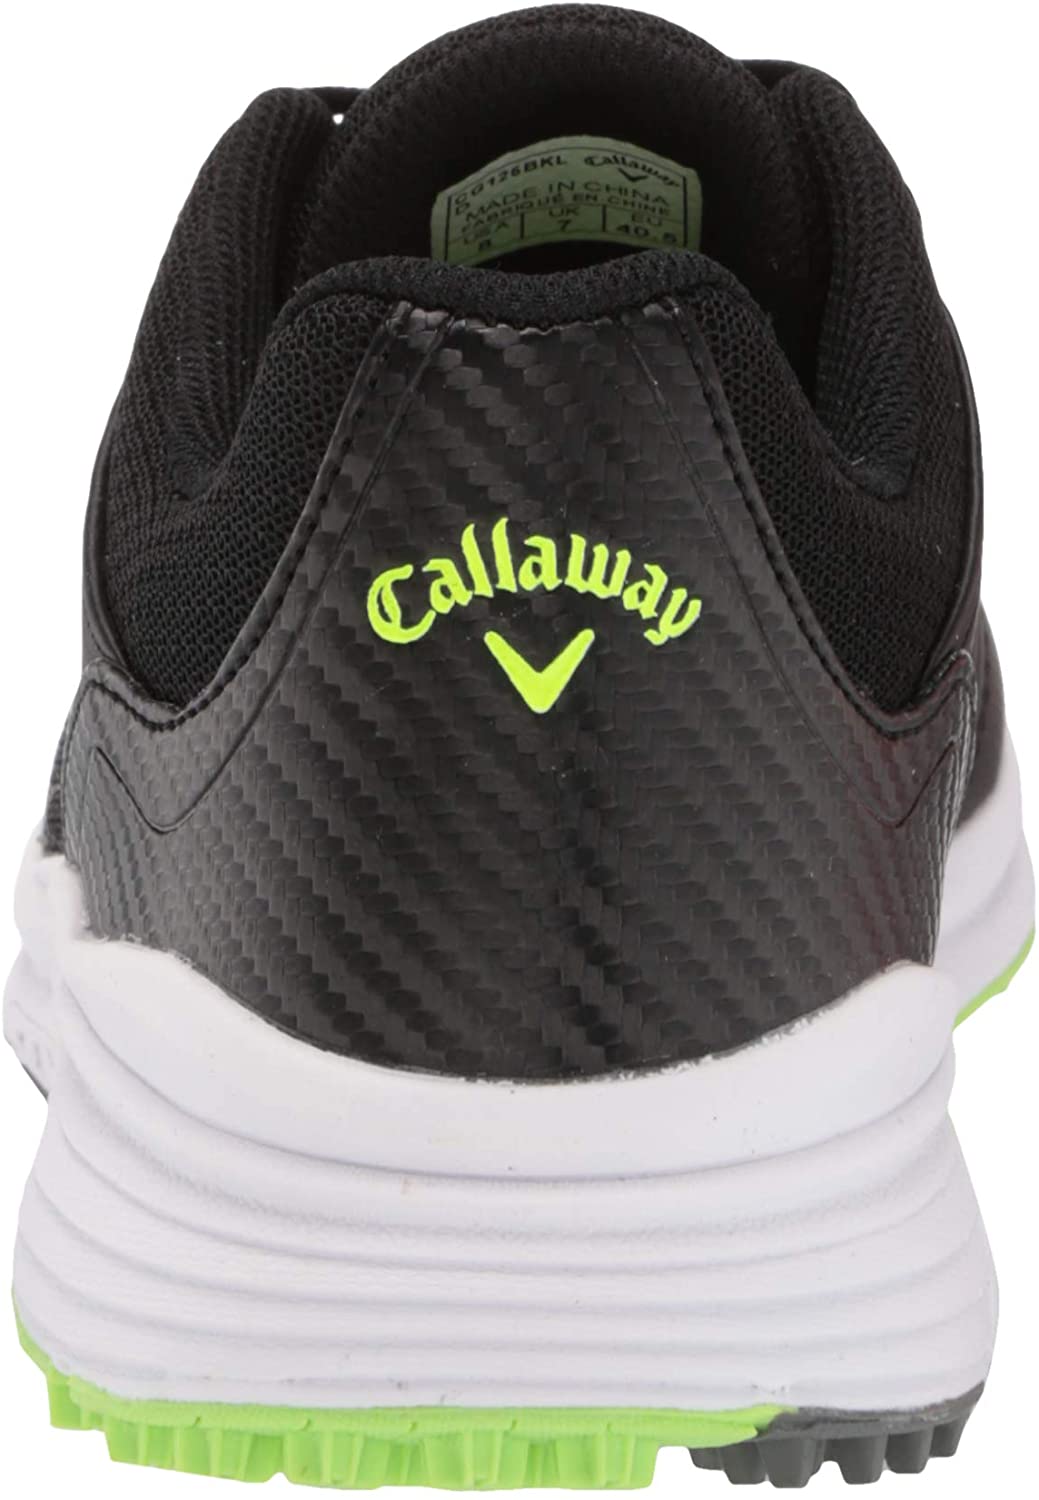 Callaway Mens Solana Sl Golf Shoe 12 Black/Lime - image 3 of 8